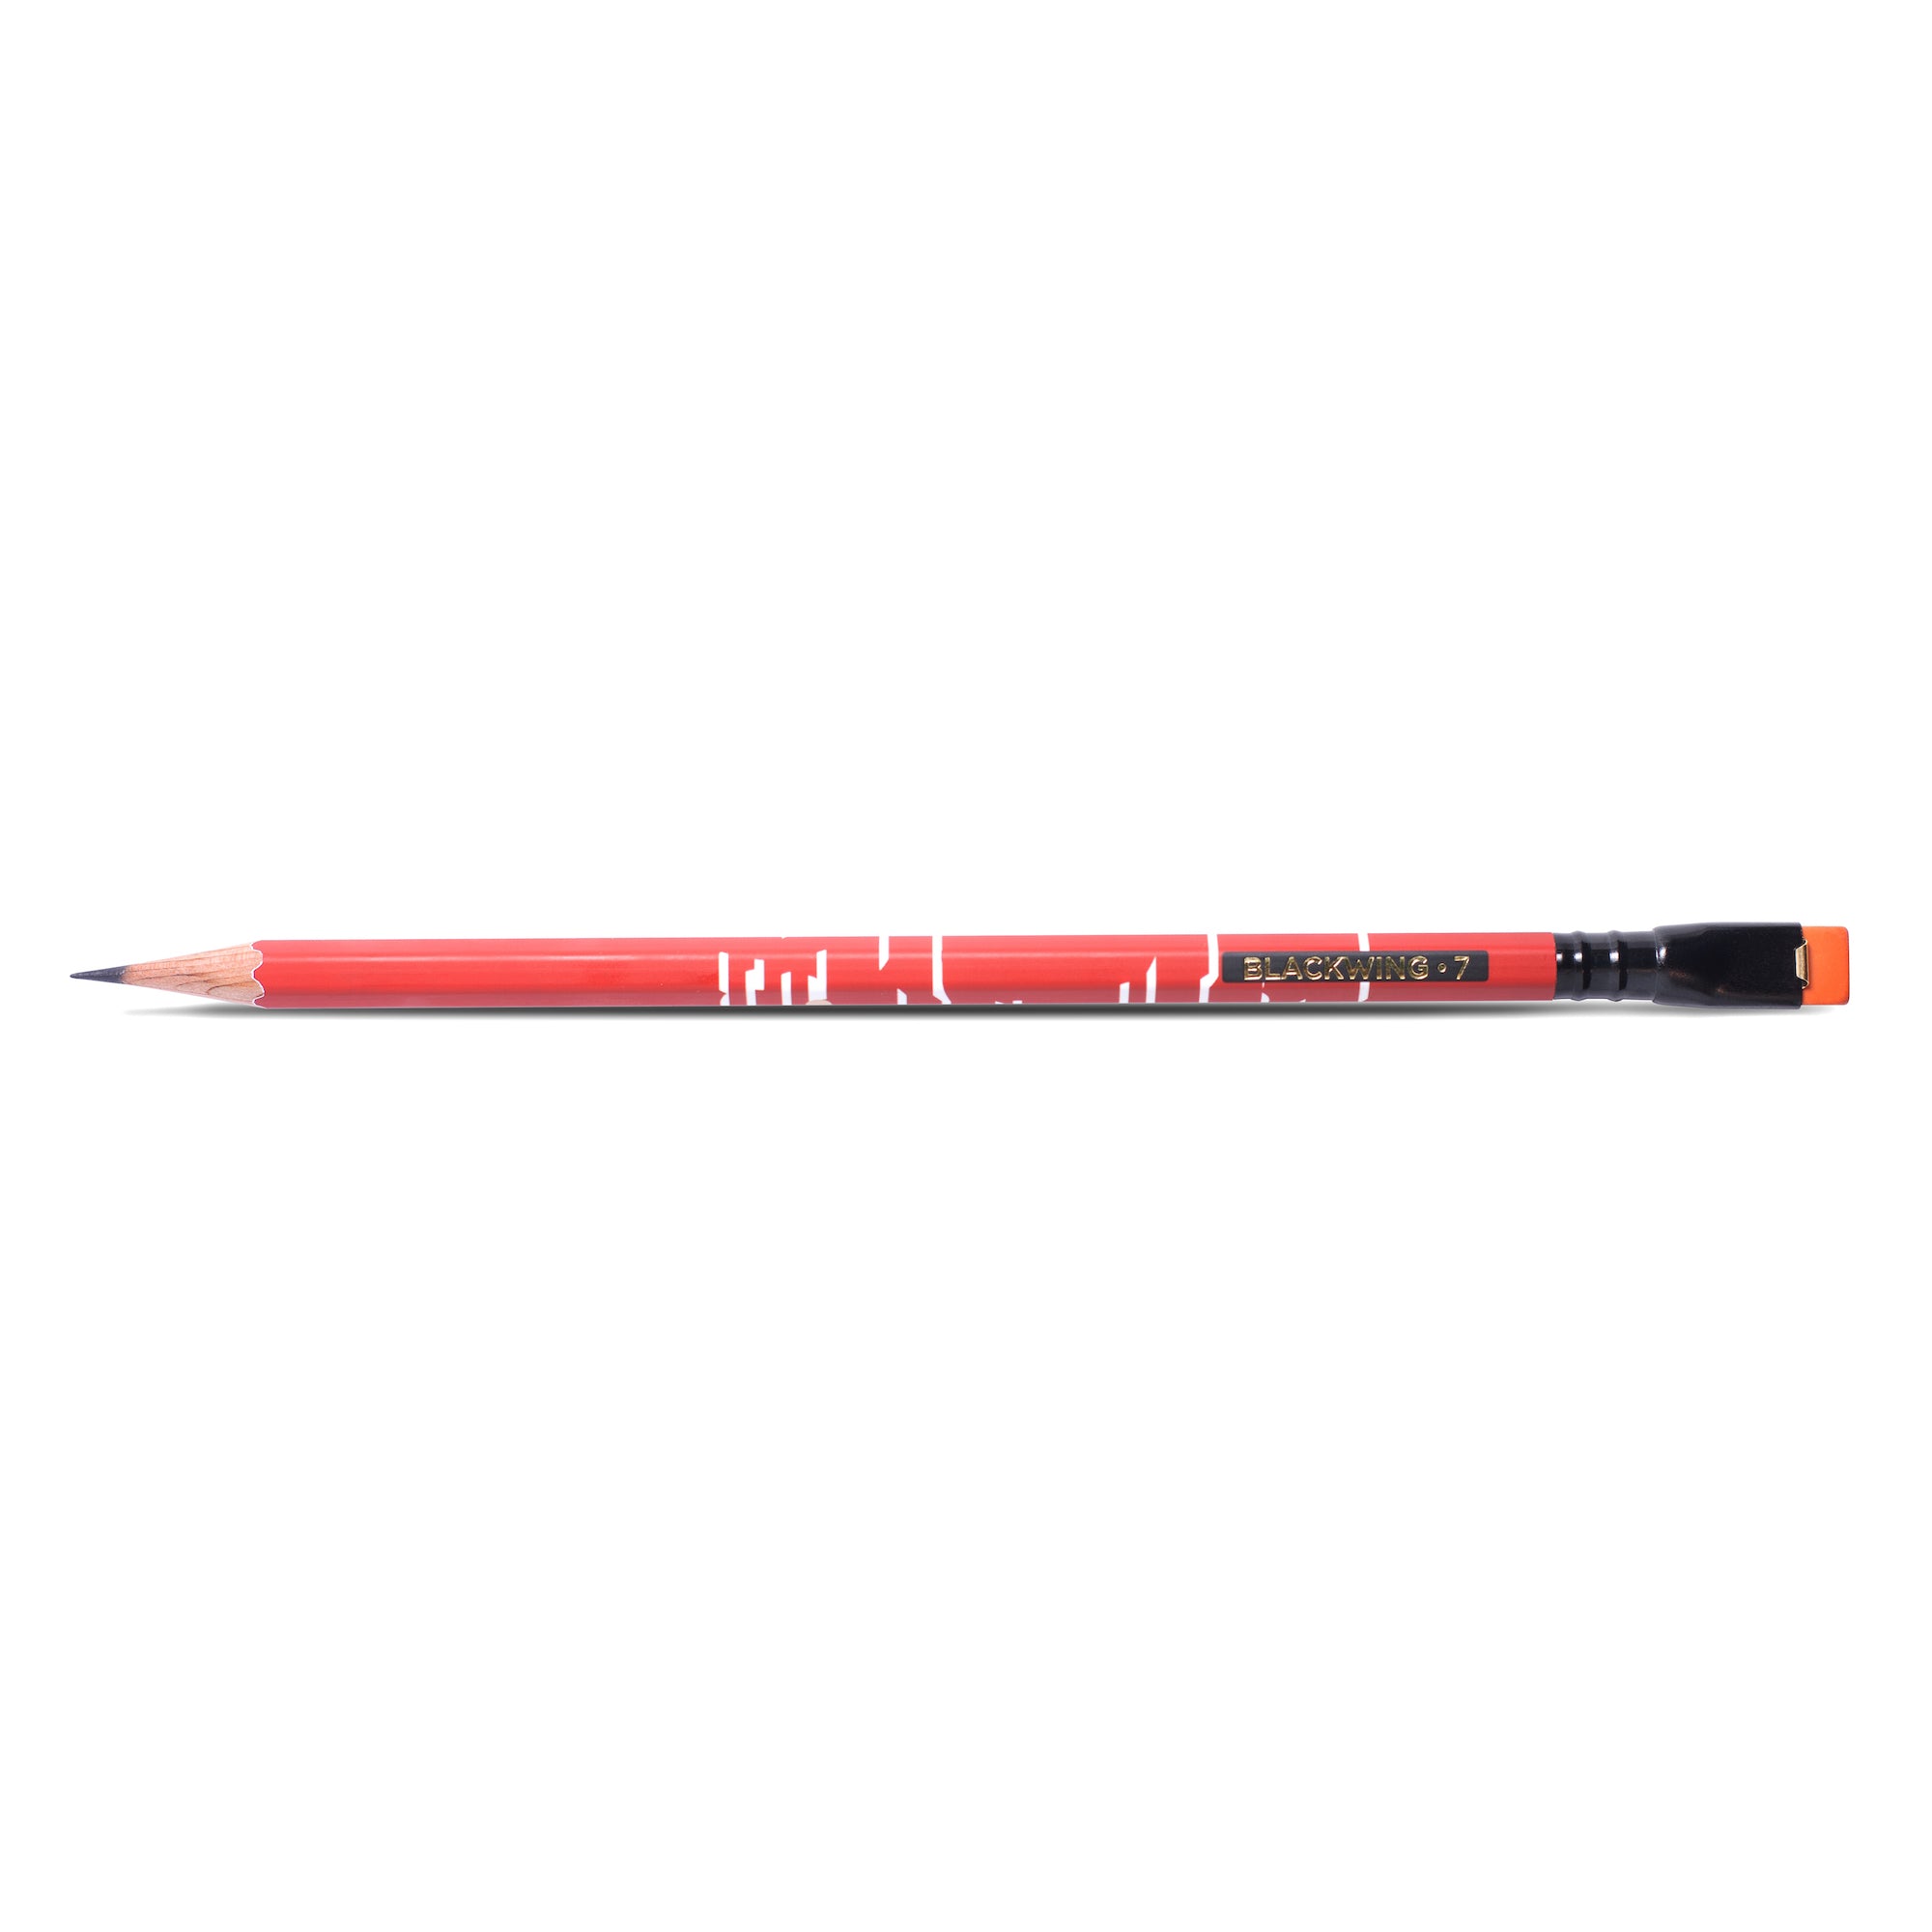 Cool Pencils for School, Buy Fun Cheap Pencils in Bulk